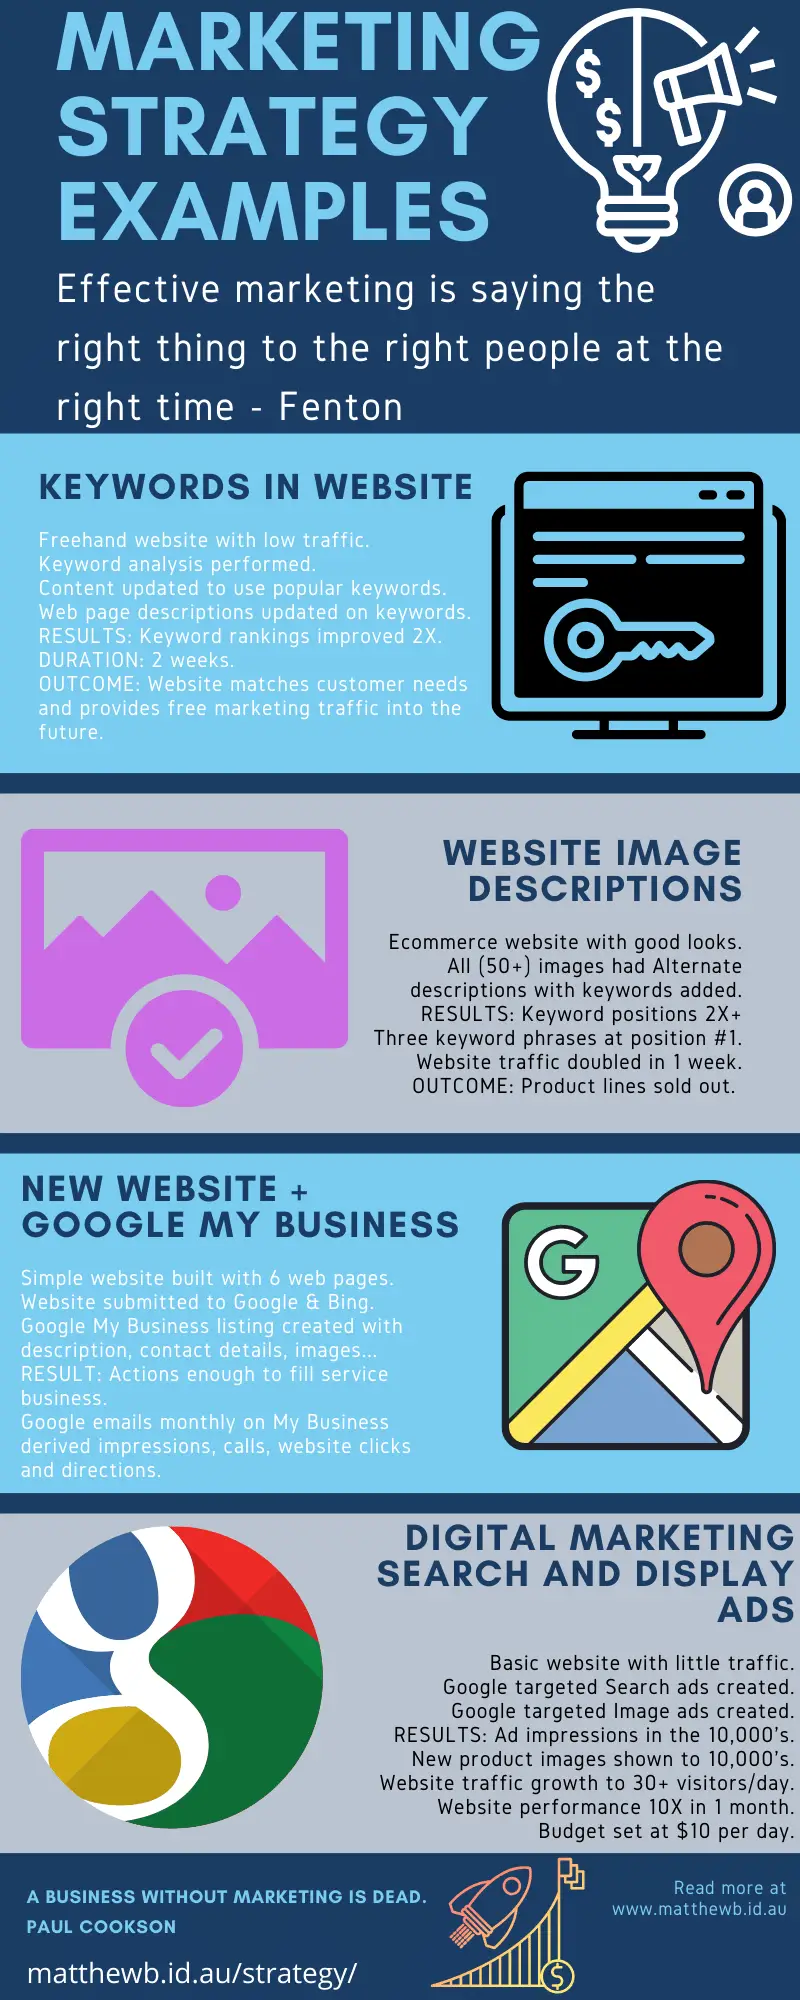 Marketing Strategy Examples Infographic - Keywords, Websites, image descriptions, Google My Business, Digital Marketing. 